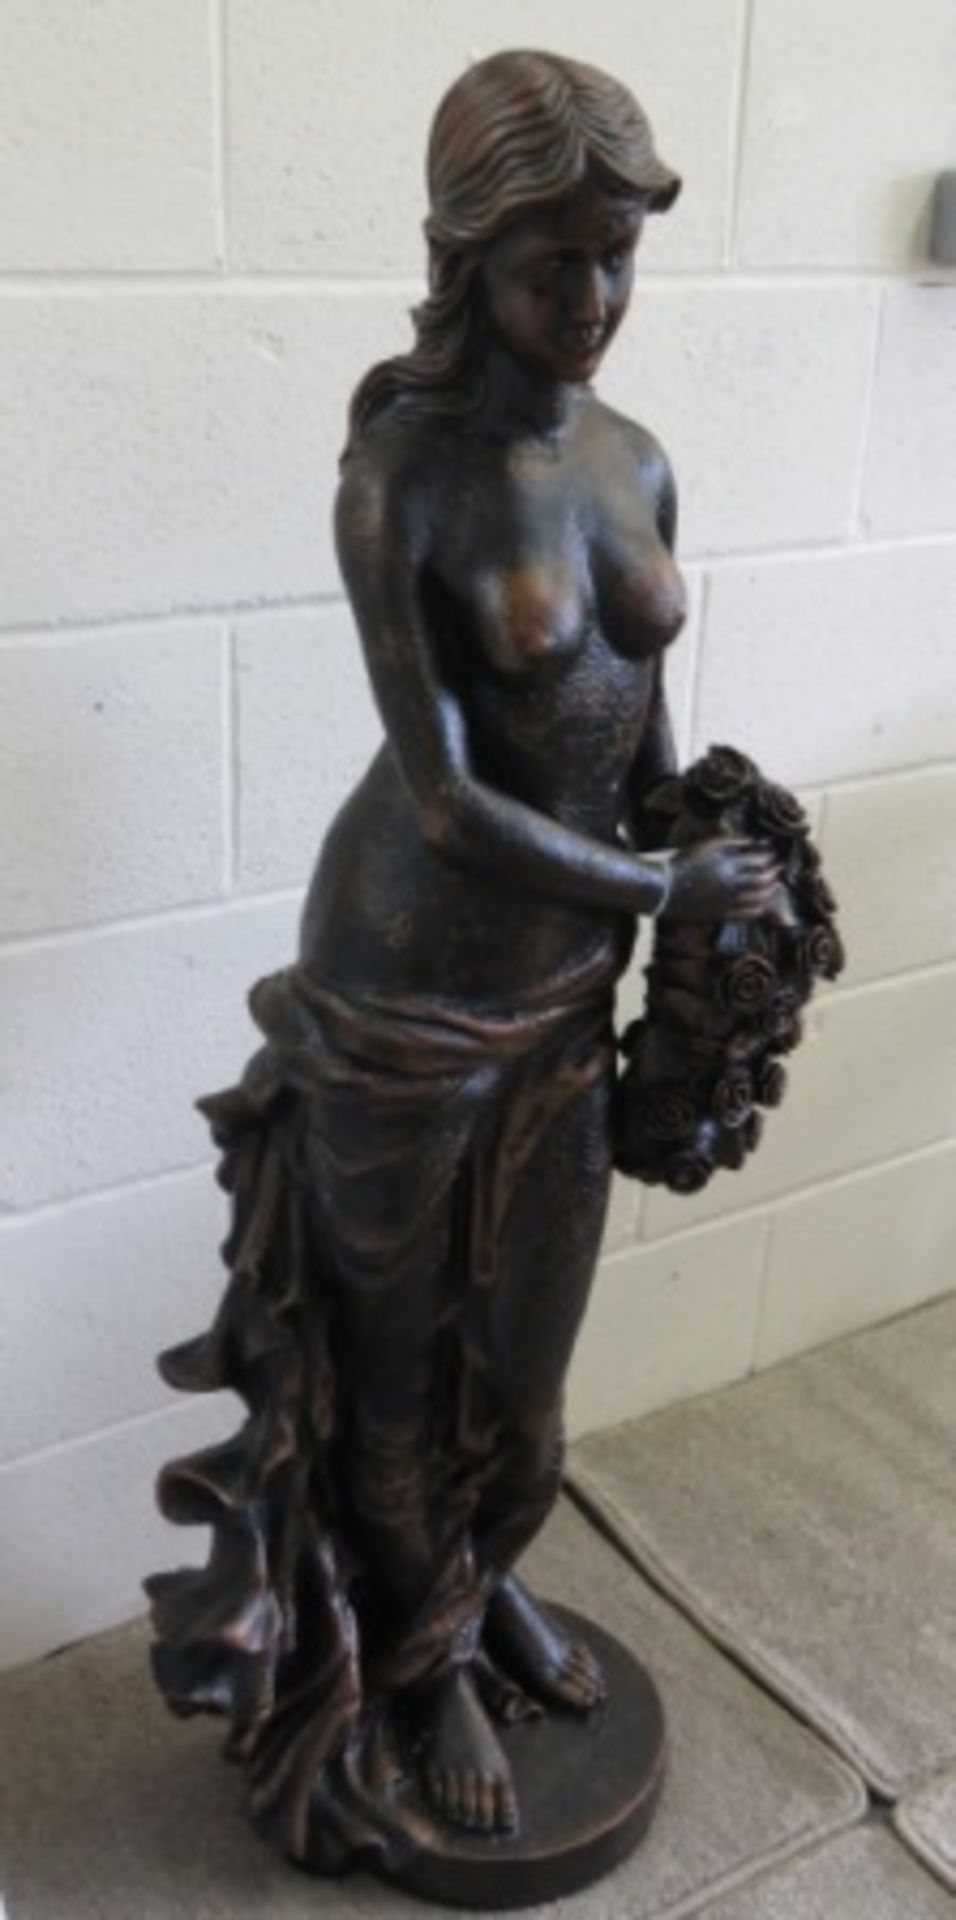 Bronzed Female Figurine - 5 Feet Tall - Image 3 of 4